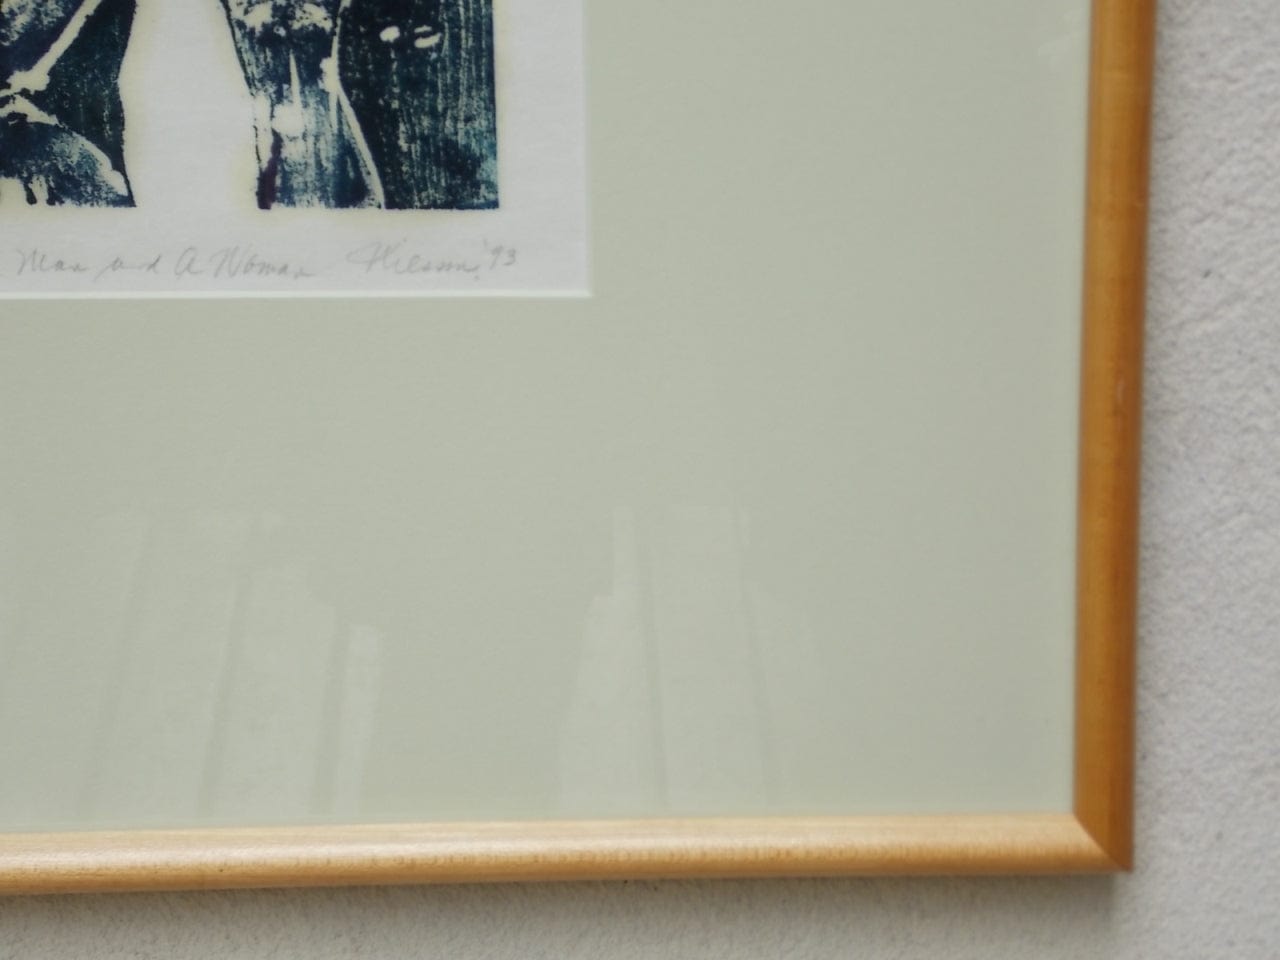 I Like Mikes Mid Century Modern Wall Decor & Art Framed Signed Original Print "A Man & A Woman", Artisan Printmaking